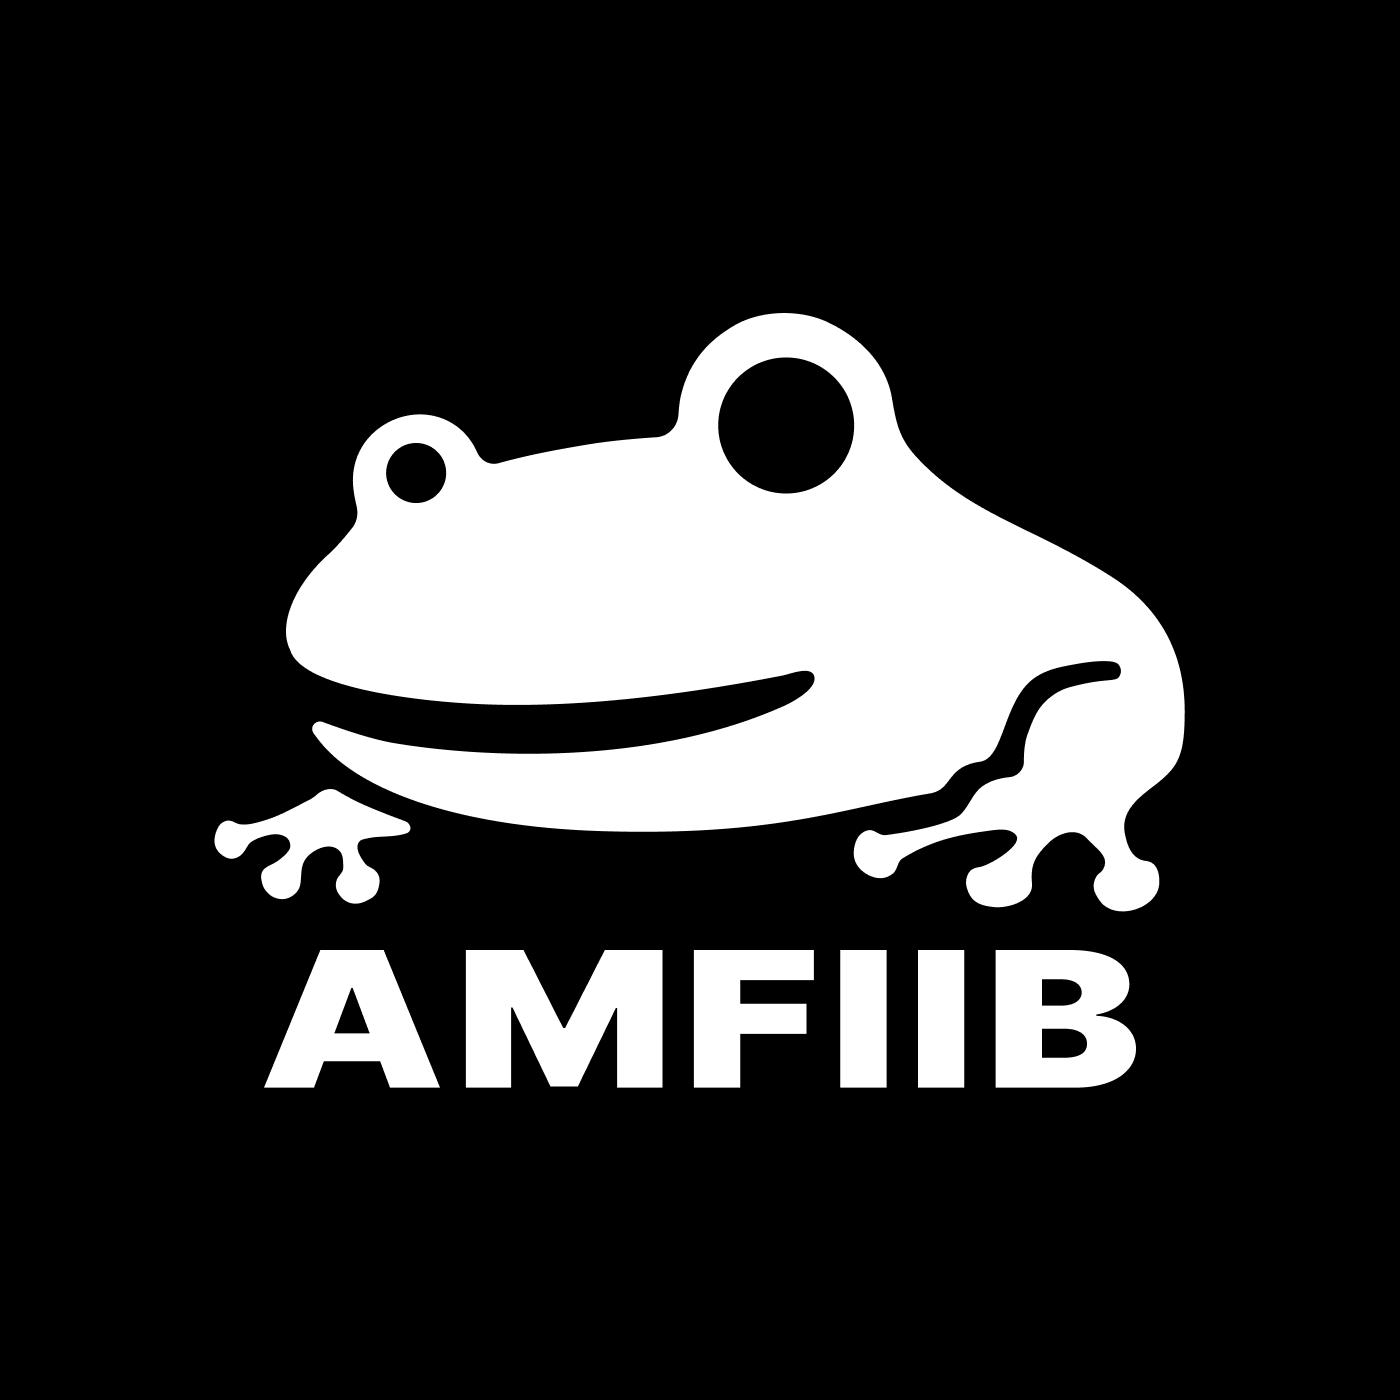 Amfiib frog logo